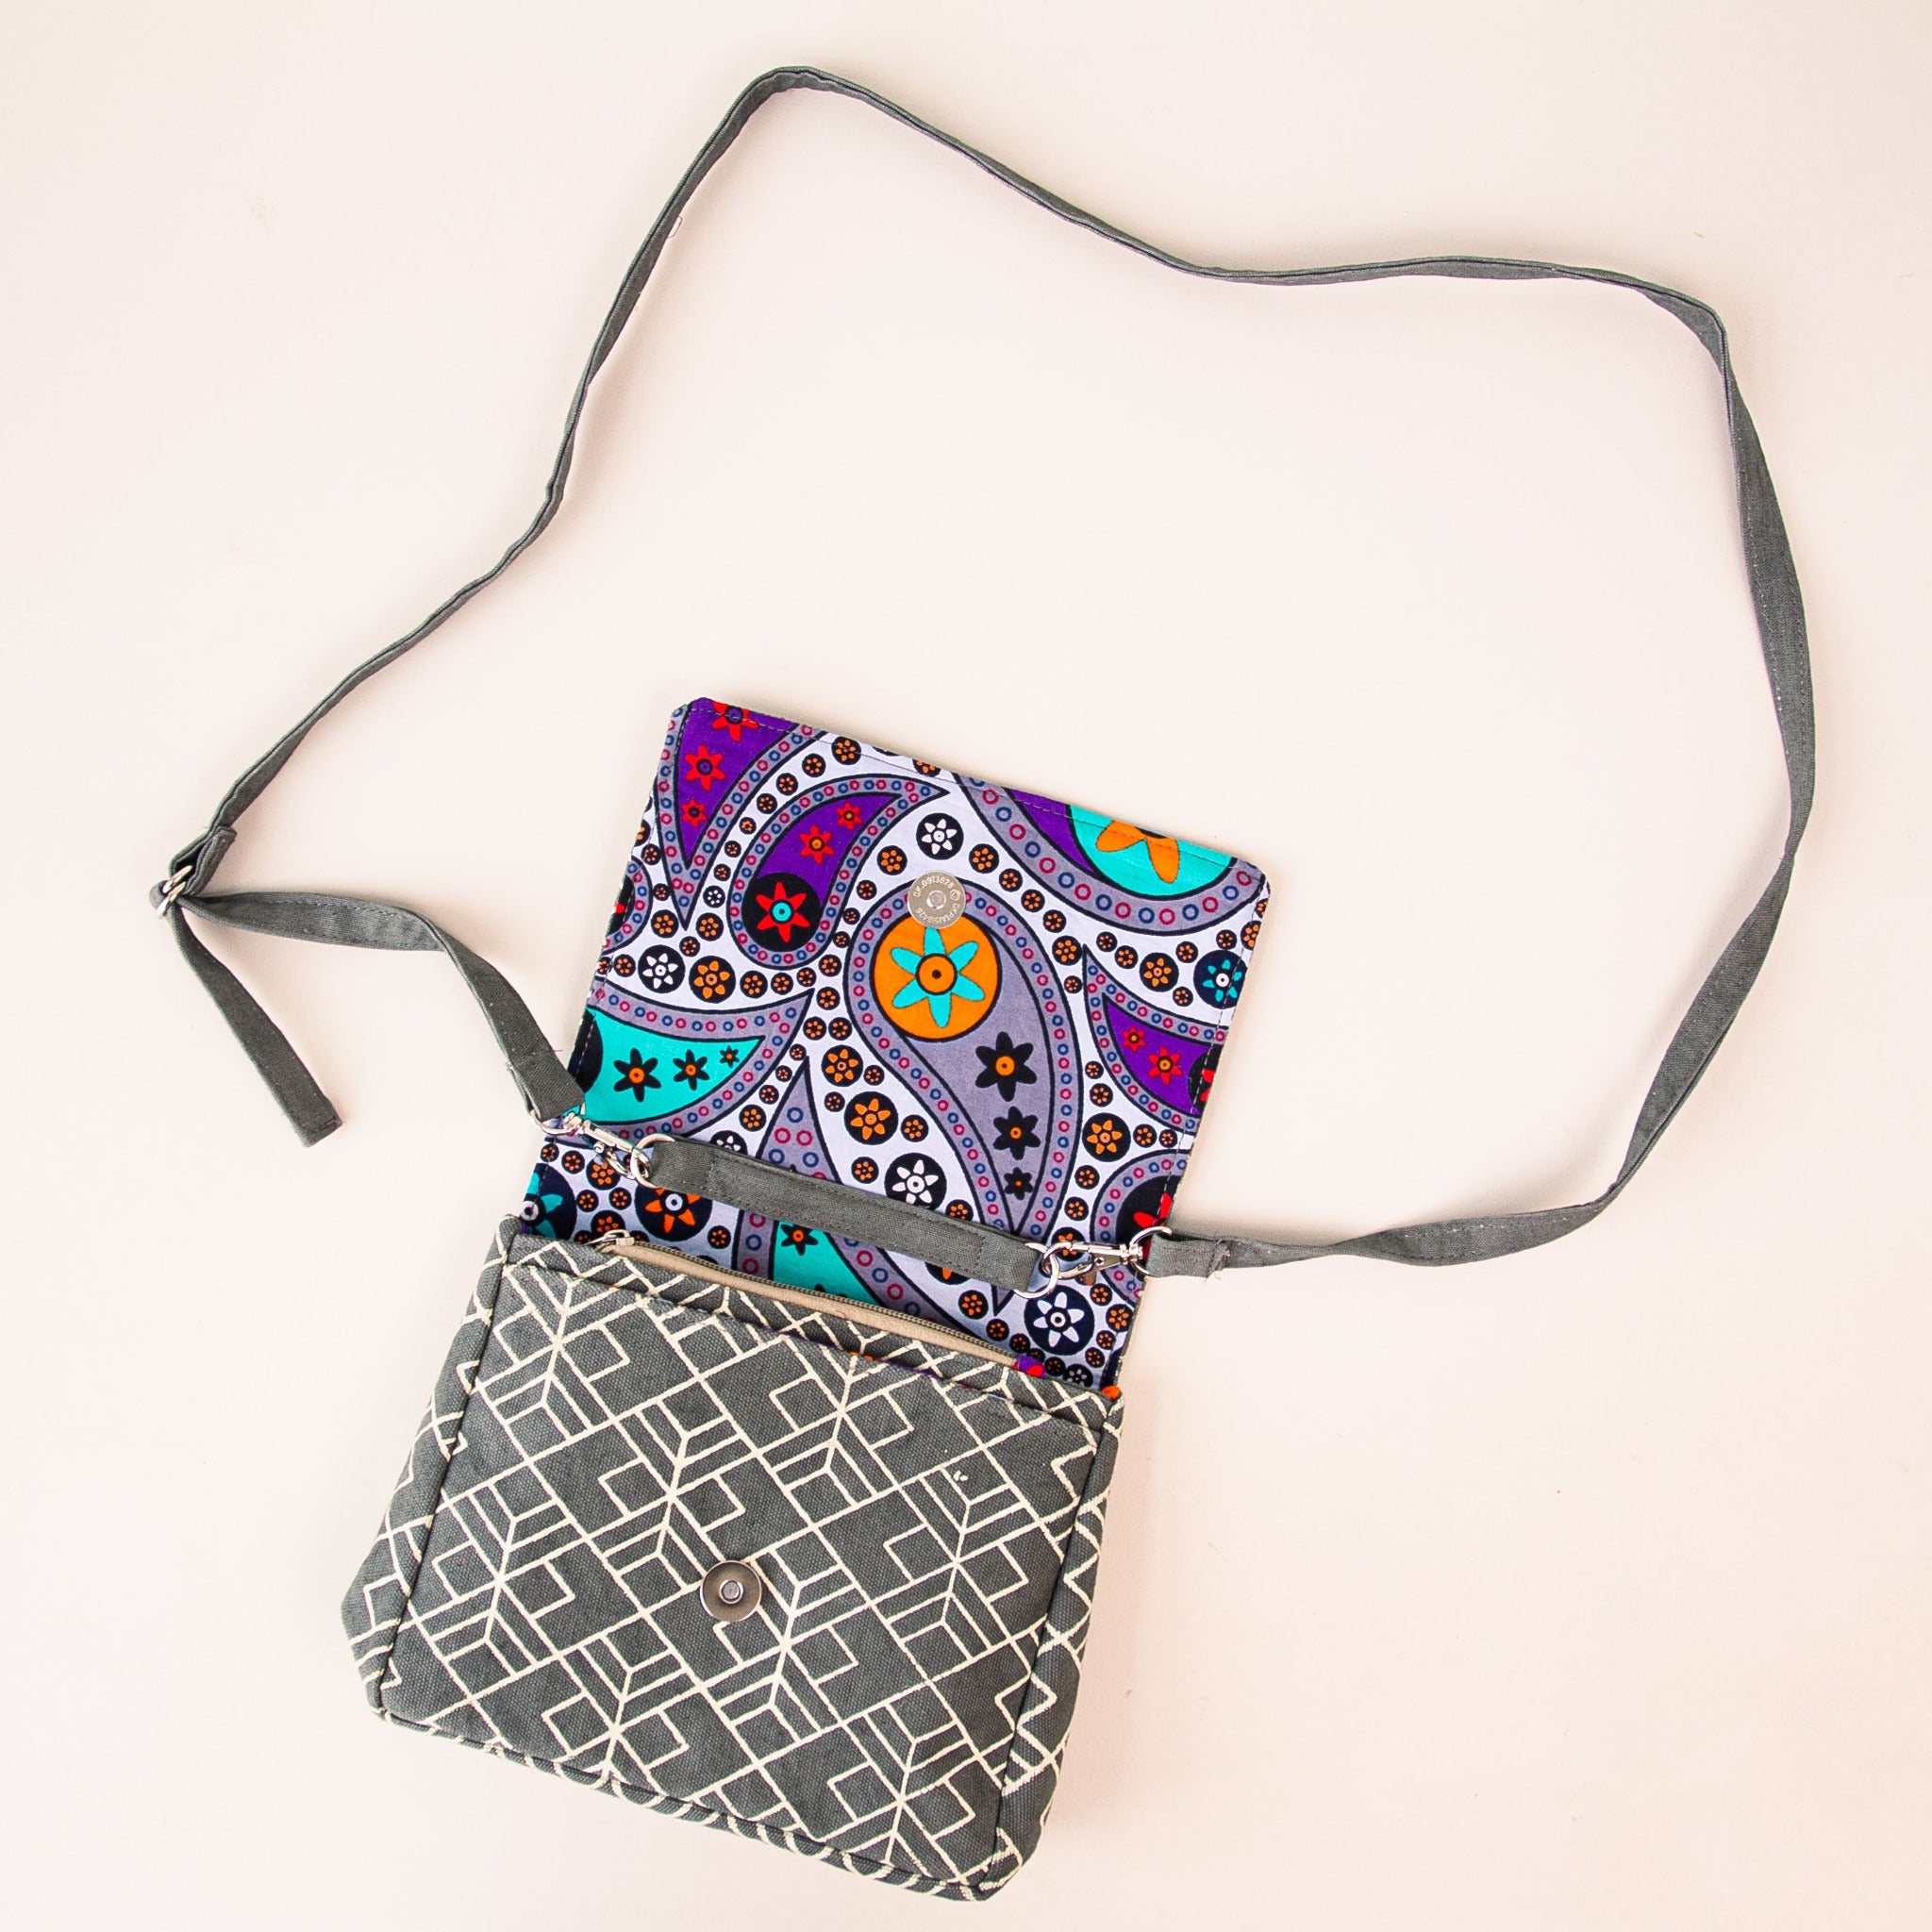 Petite Crossbody Bag handmade by the women of Amani ya Juu in Kenya, a sewing program for refugee women in Africa